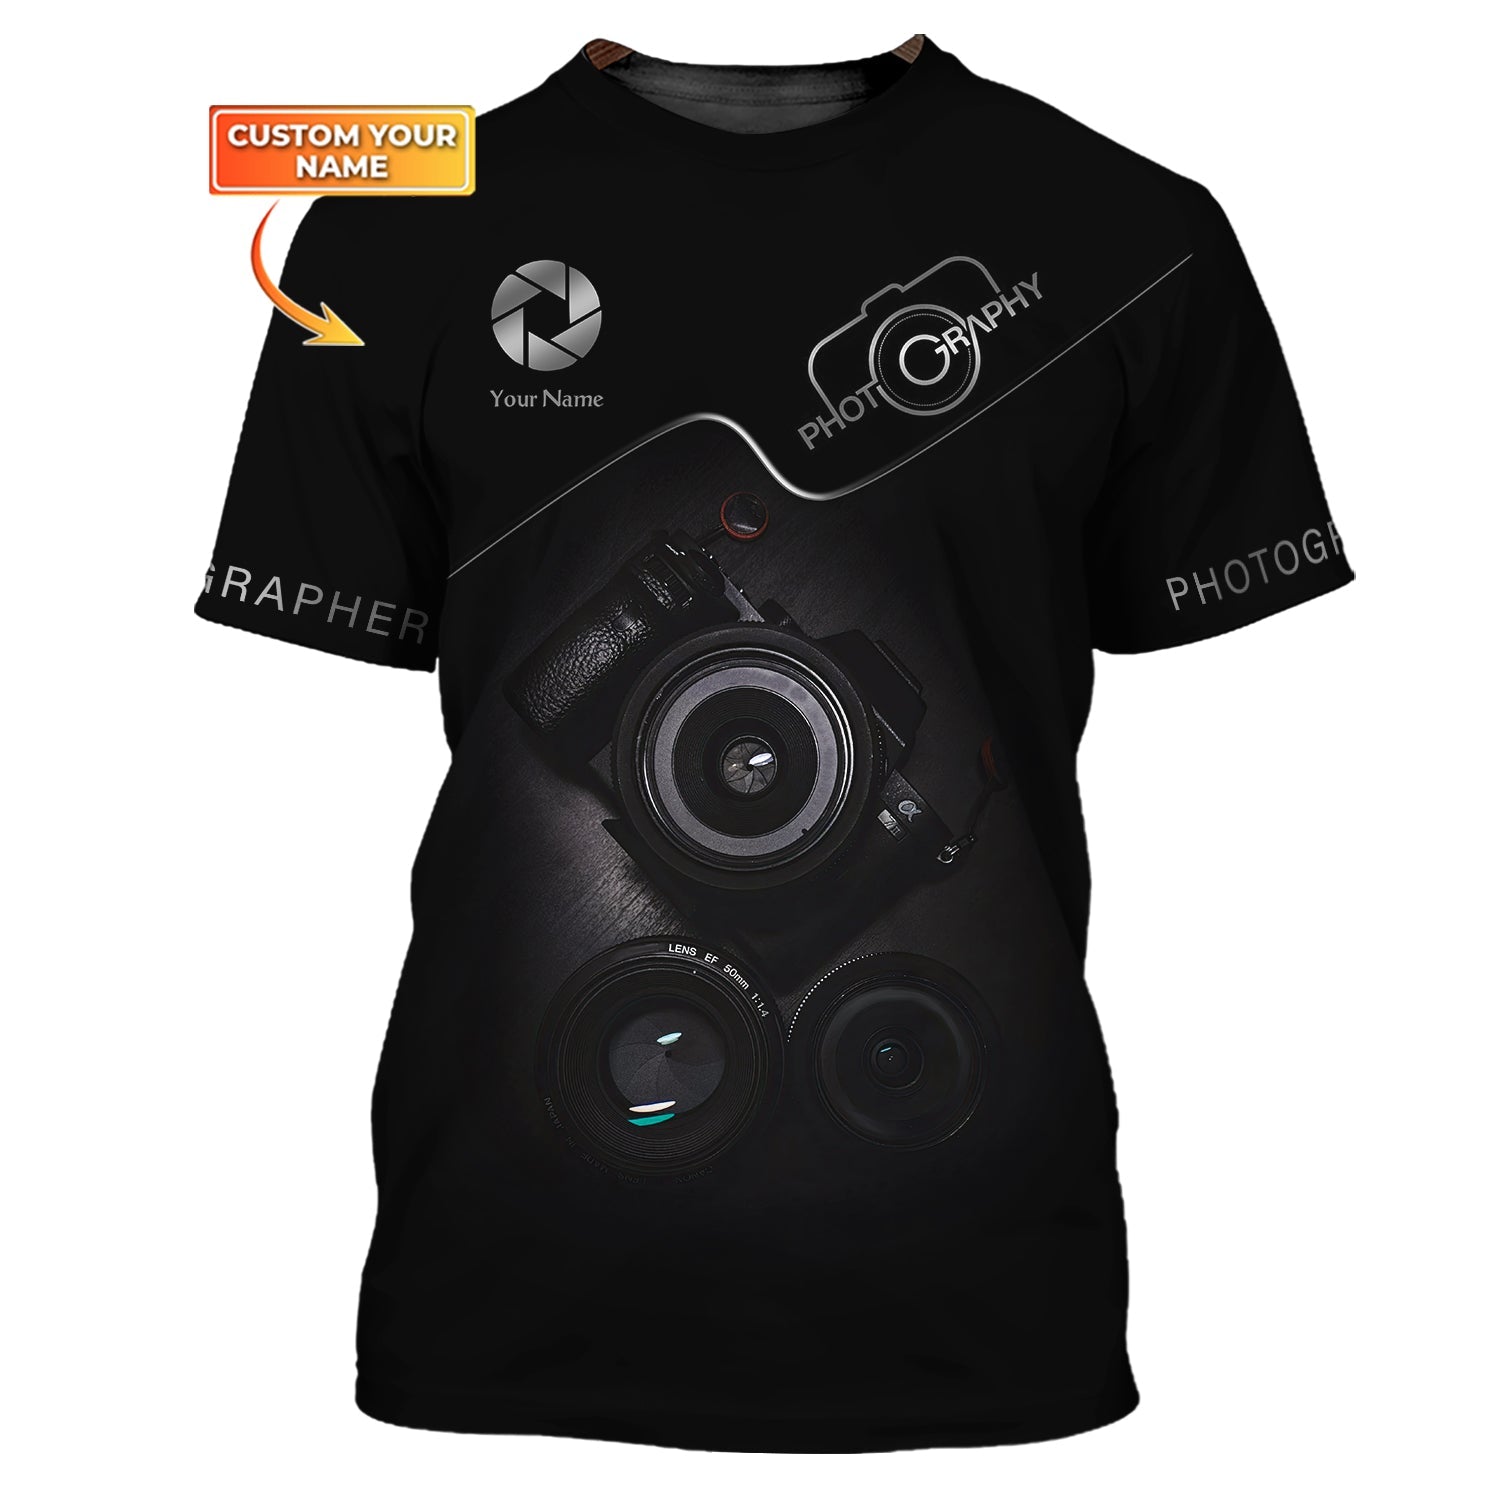 Unisex Shirt, Photographer Shirt, What the F, T-shirt For Photographer